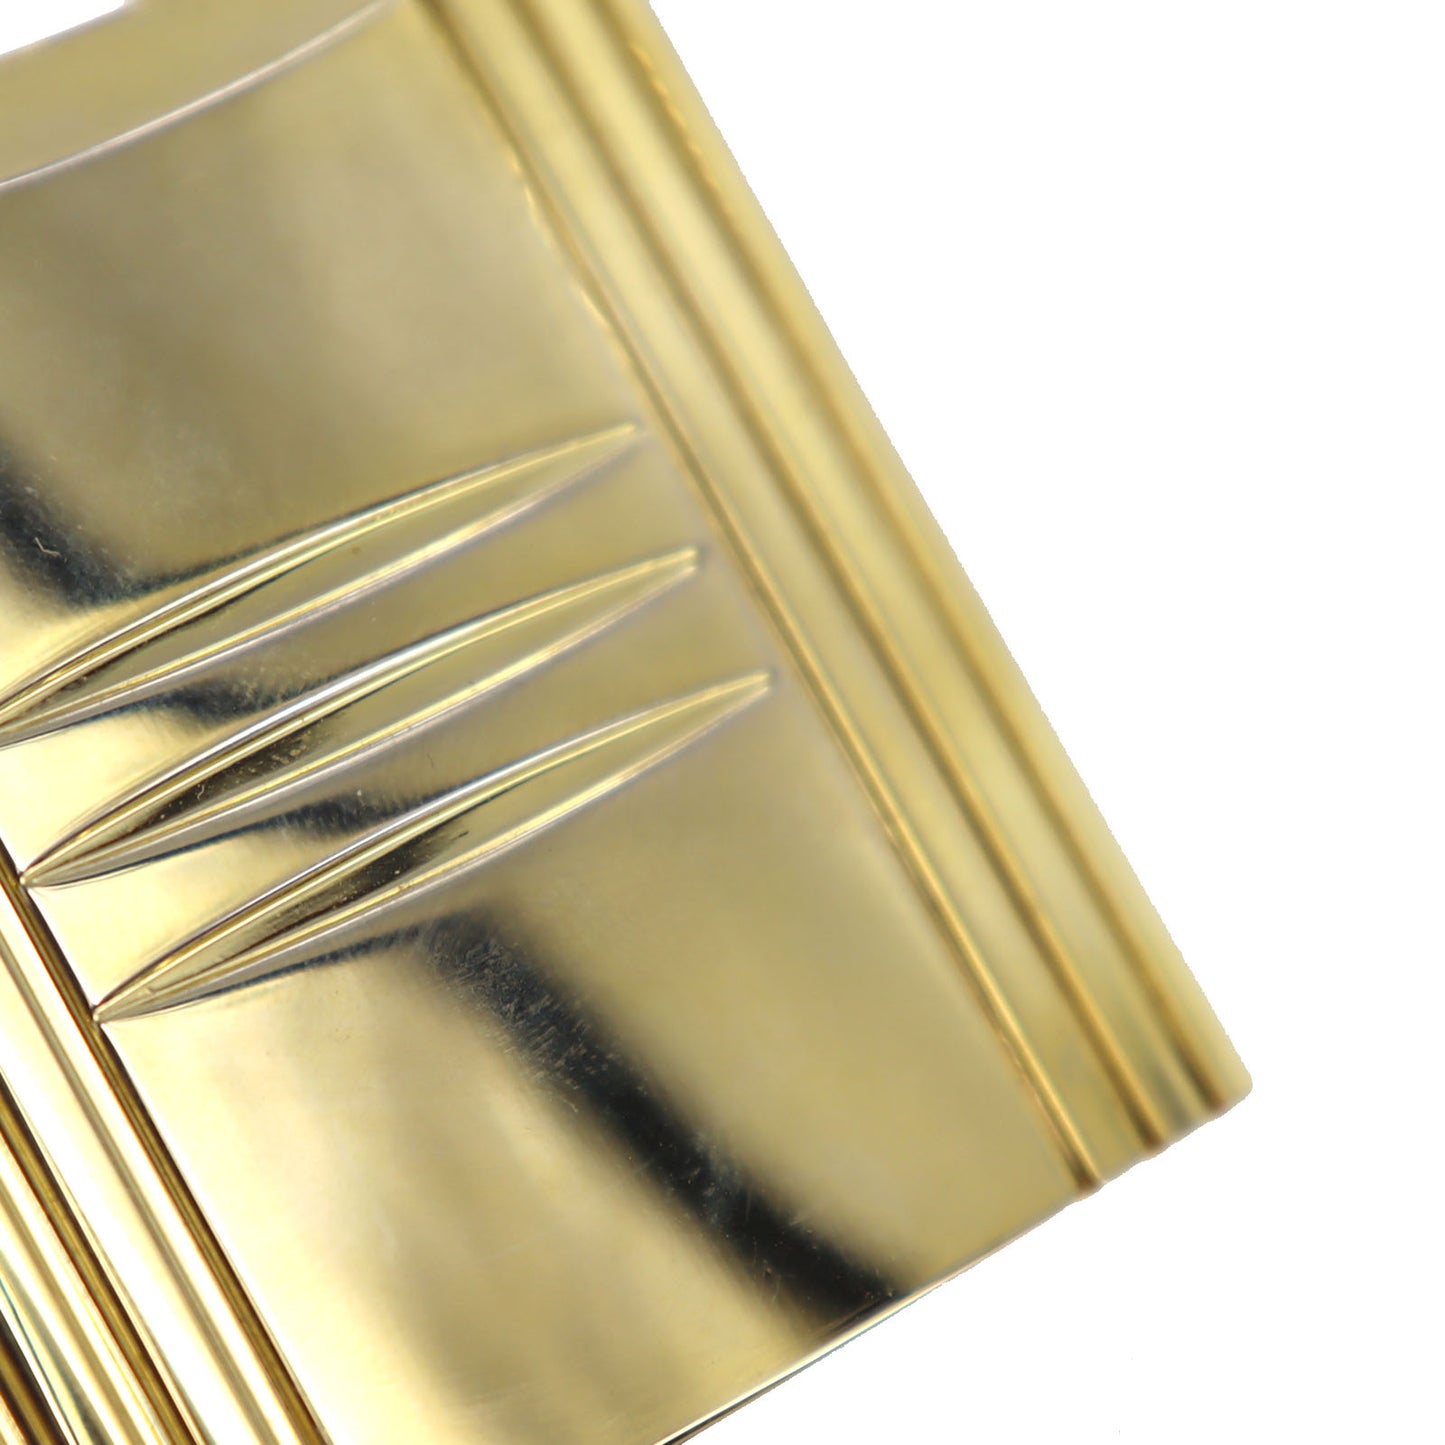 HERMES Cadena Perfume Case Gold-Plated #AH384